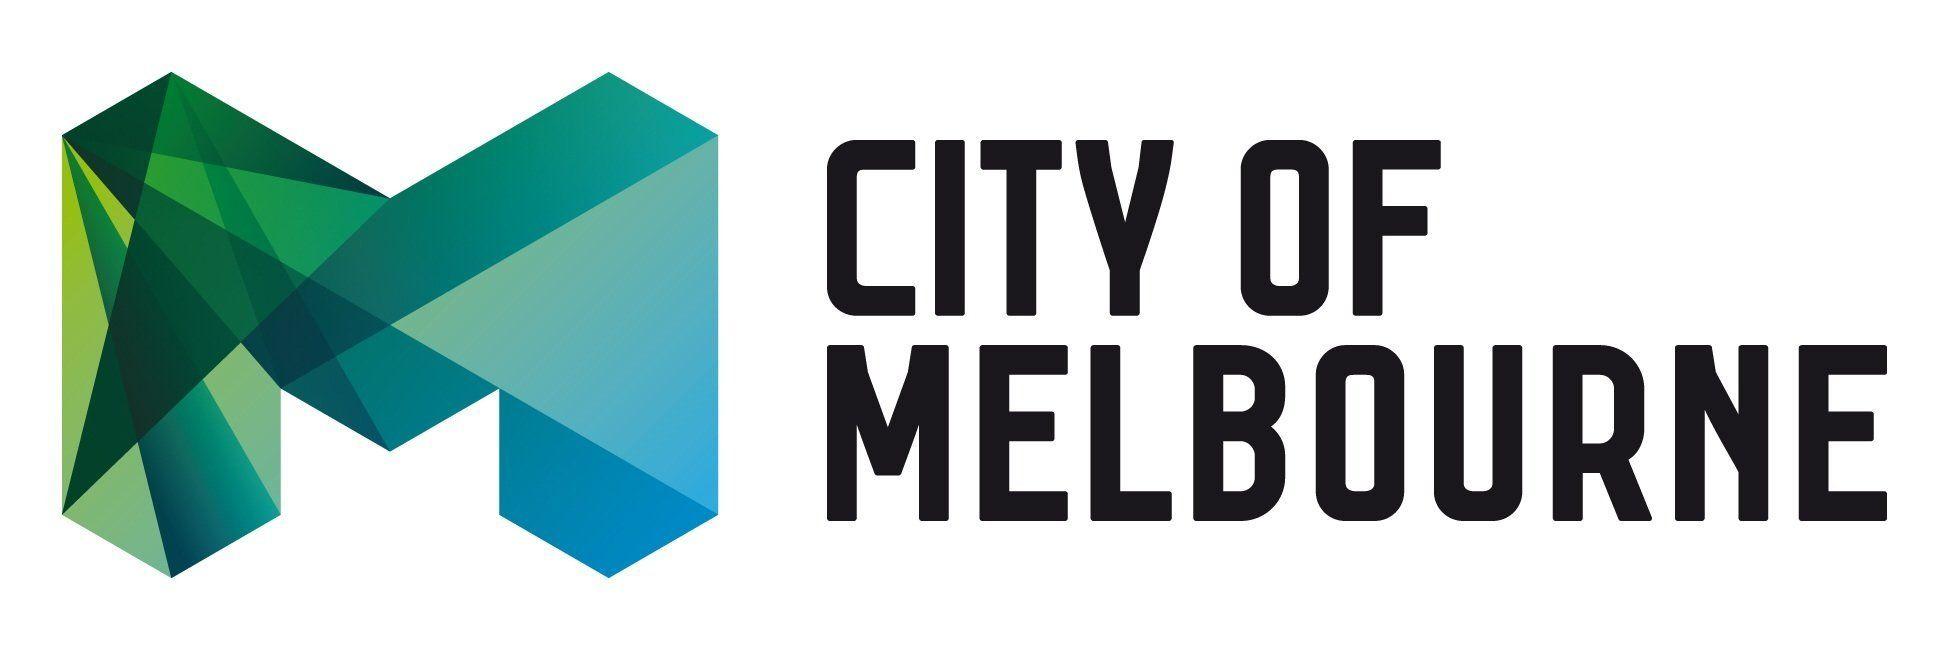 Melbourne Logo - City of Melbourne | Logo | Logo design, Logos, City logo